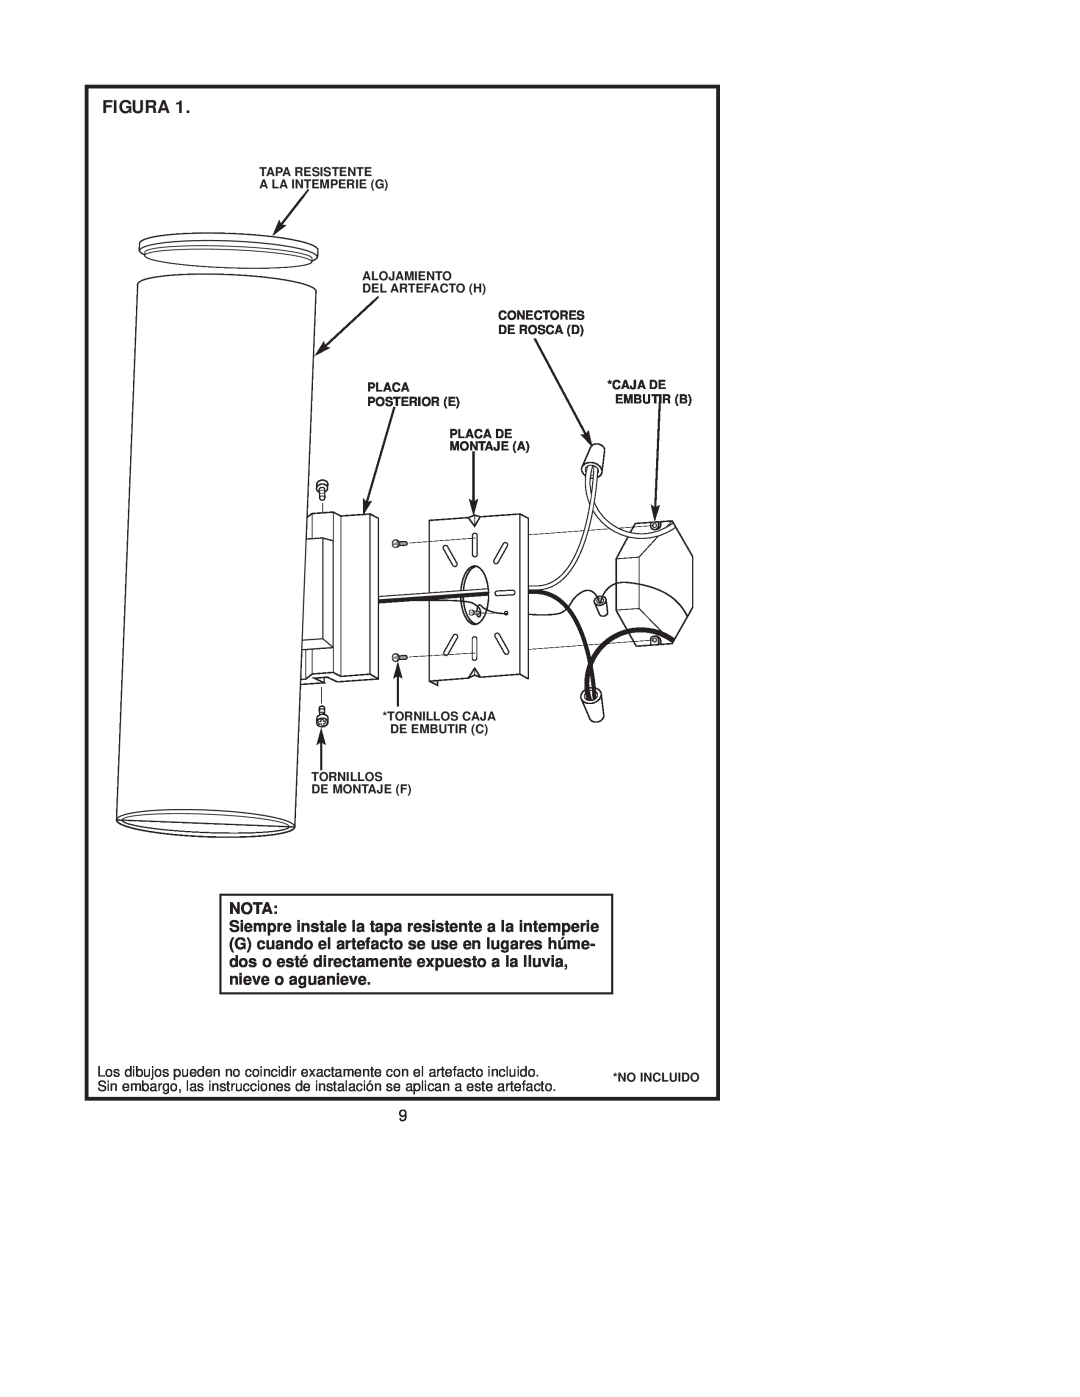 Westinghouse 121504 Figura, NOTA Siempre instale la tapa resistente a la intemperie, Caja De Embutir B, No Incluido 